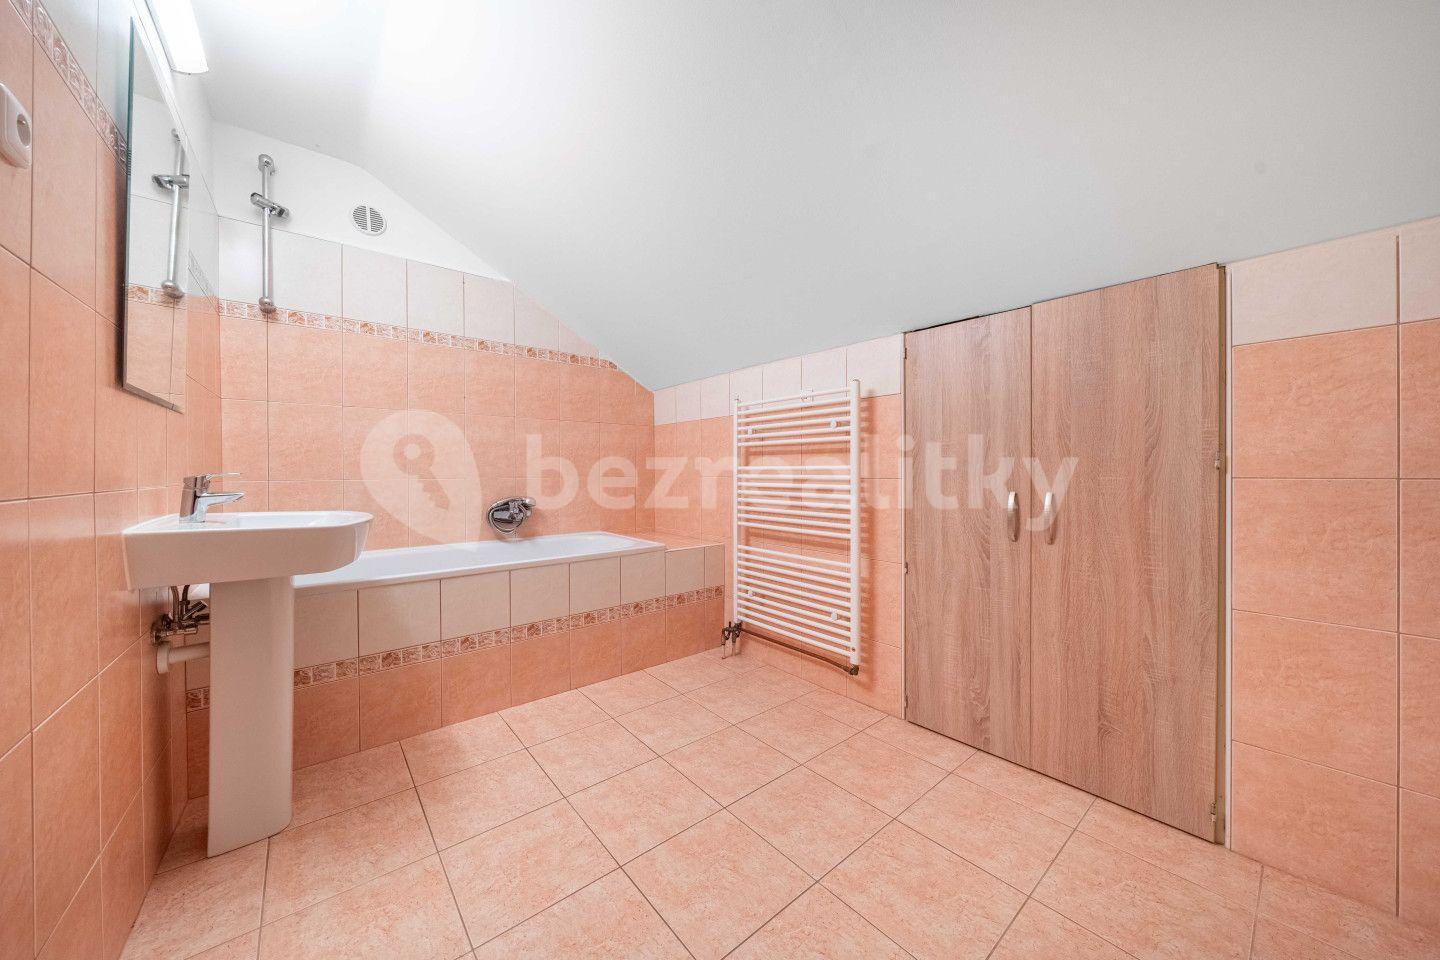 2 bedroom flat for sale, 69 m², Rejchova, Chudenice, Plzeňský Region